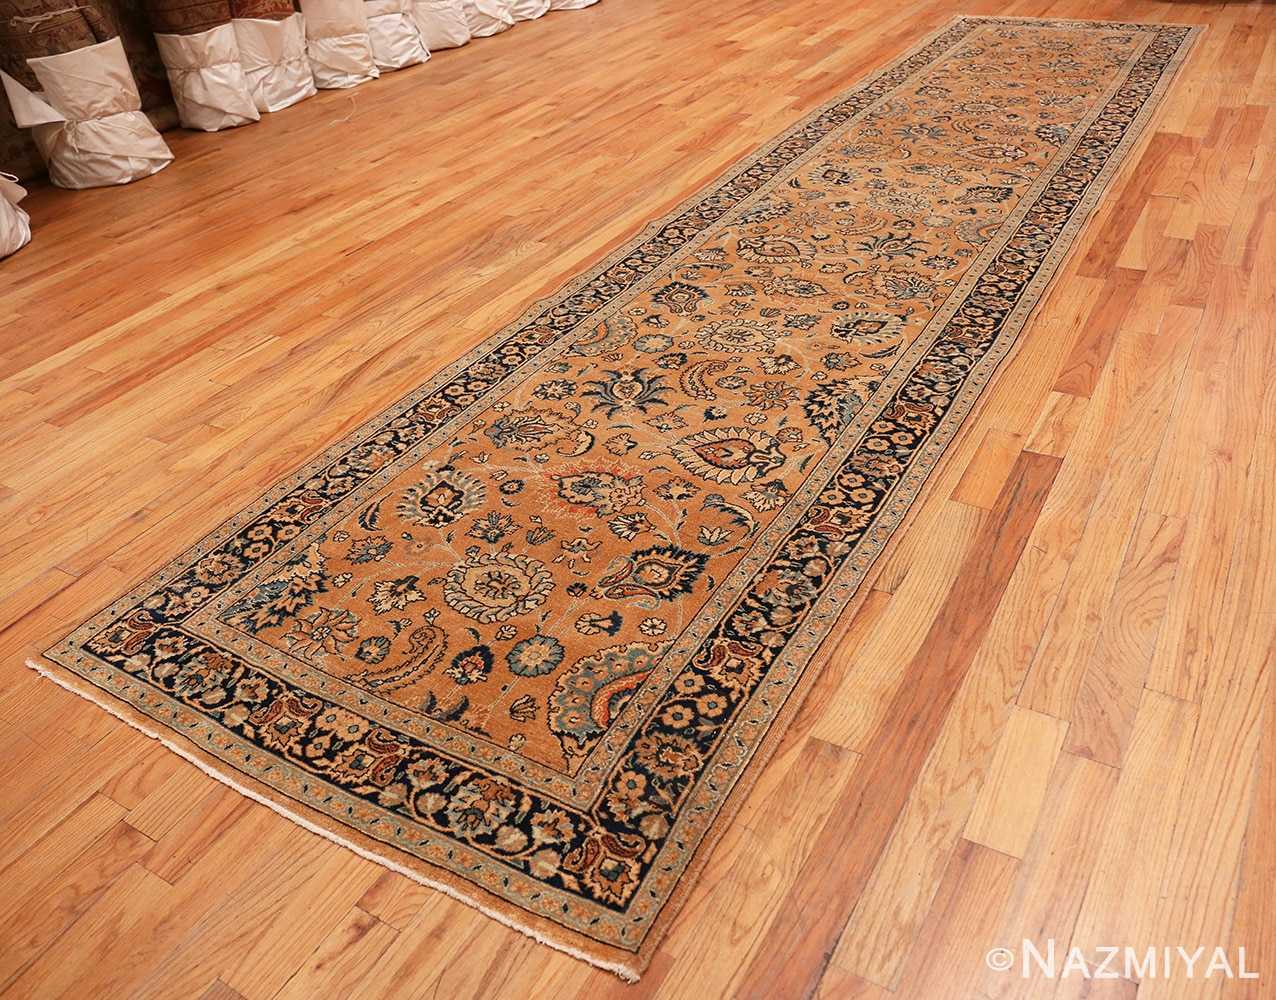 Full Antique Khorassan long runner rug 47219 by Nazmiyal